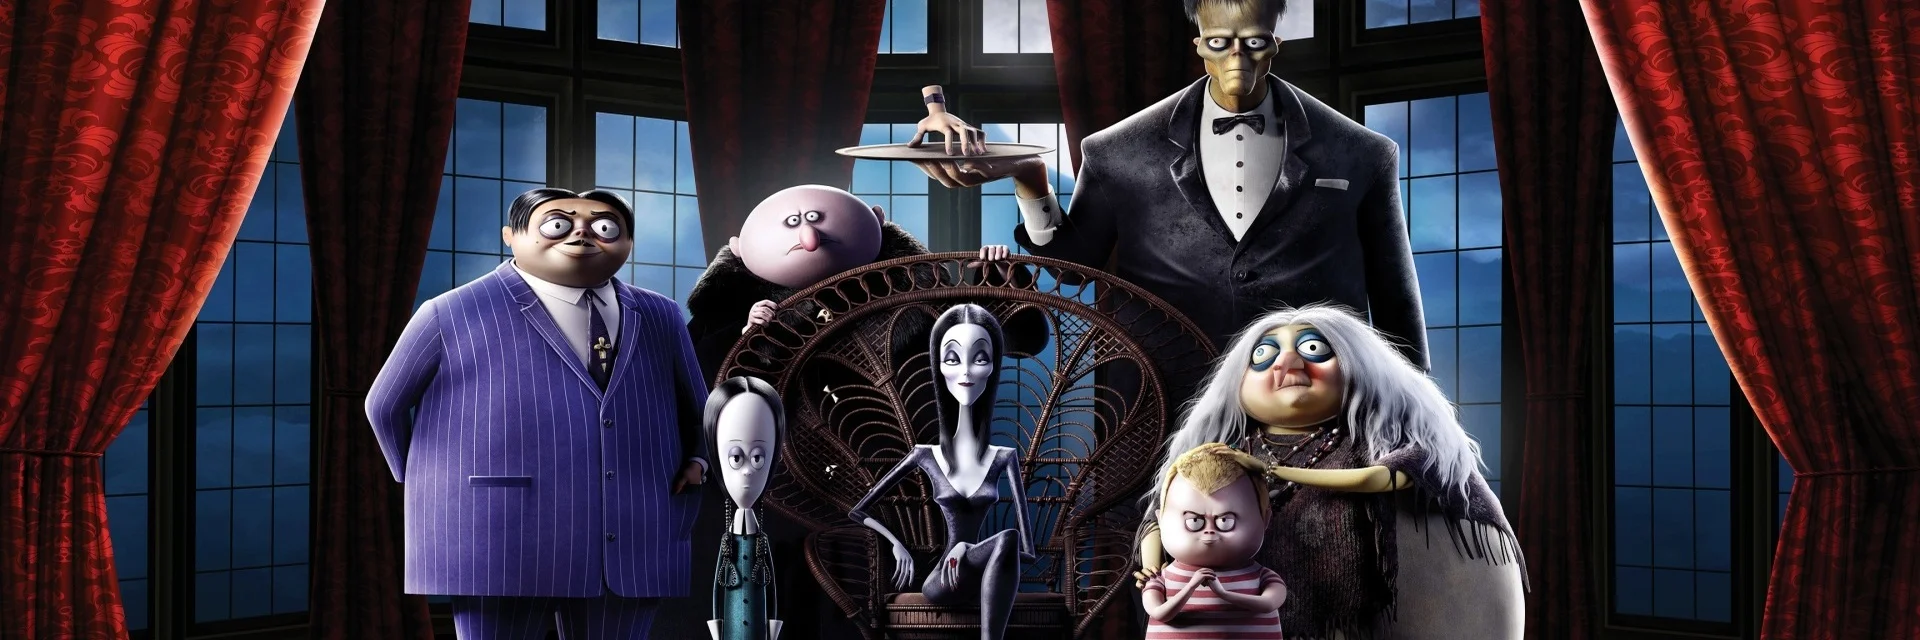 The Addams Family 4K 2019 big poster